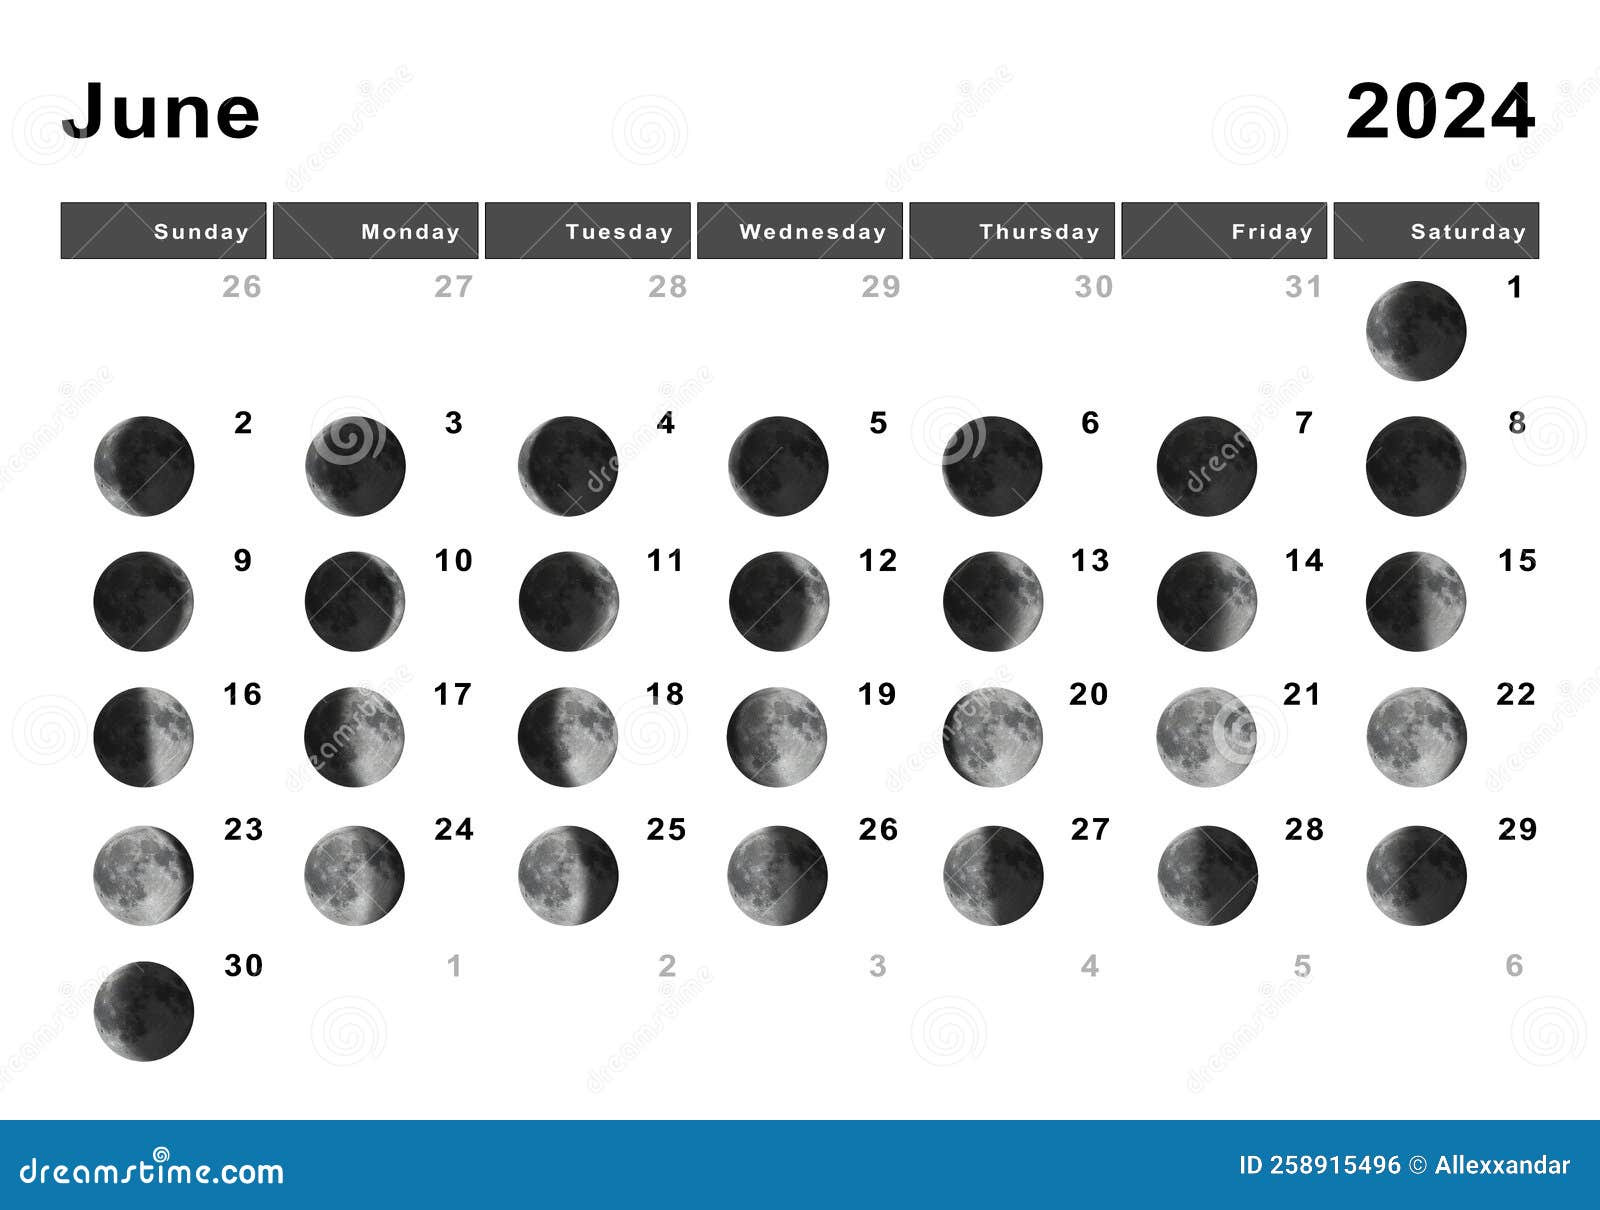 June 2024 Lunar Calendar, Moon Cycles Stock Illustration with Lunar Calendar June 2024